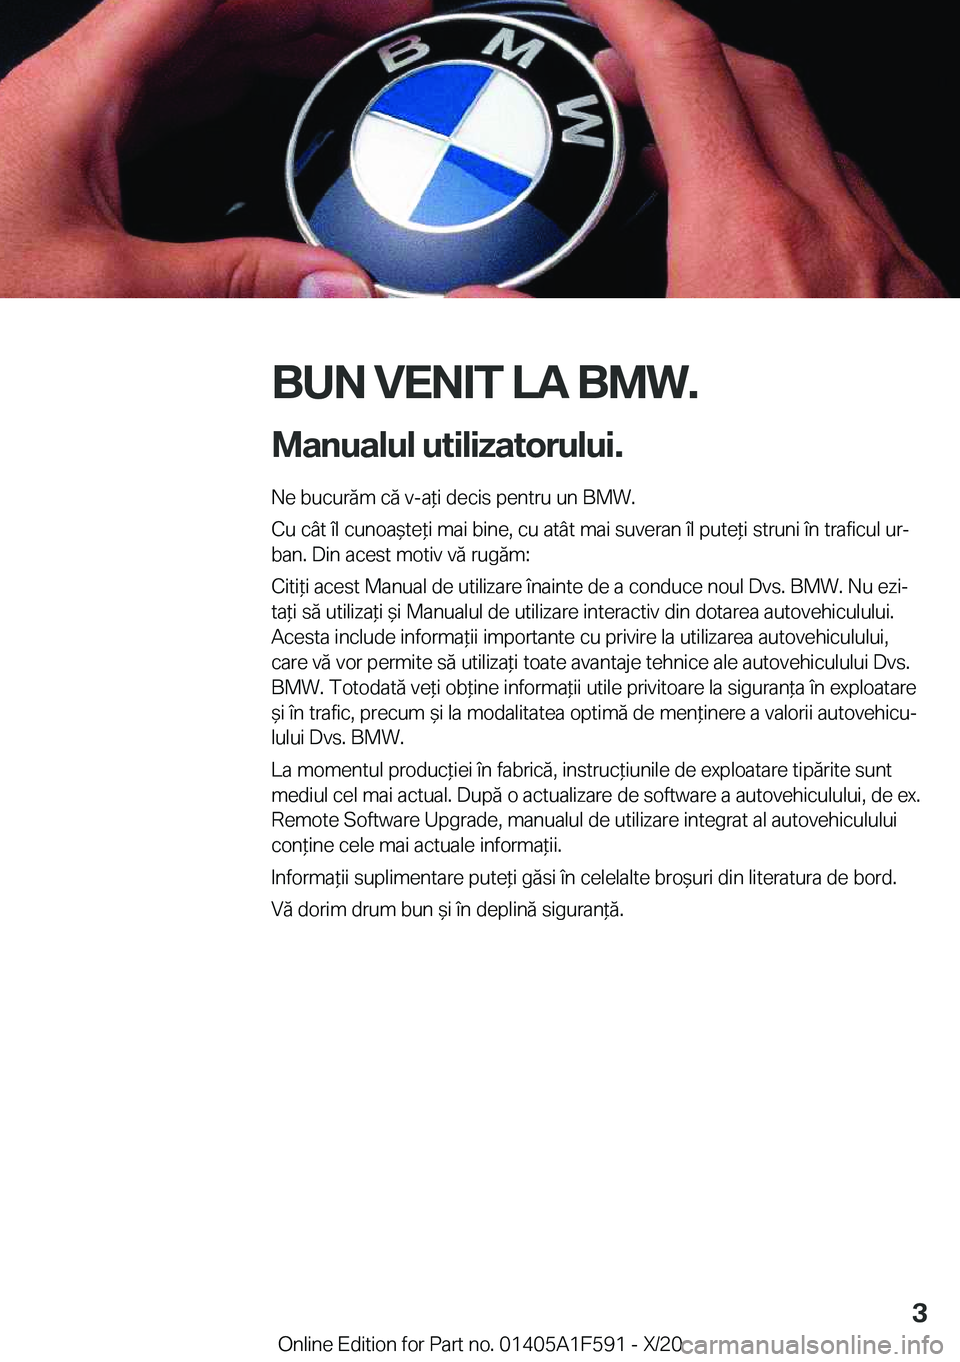 BMW X3 M 2021  Ghiduri De Utilizare (in Romanian) �B�U�N��V�E�N�I�T��L�A��B�M�W�.�M�a�n�u�a�l�u�l��u�t�i�l�i�z�a�t�o�r�u�l�u�i�.
�N�e��b�u�c�u�r�ă�m��c�ă��v�-�a*�i��d�e�c�i�s��p�e�n�t�r�u��u�n��B�M�W�.
�C�u��c�